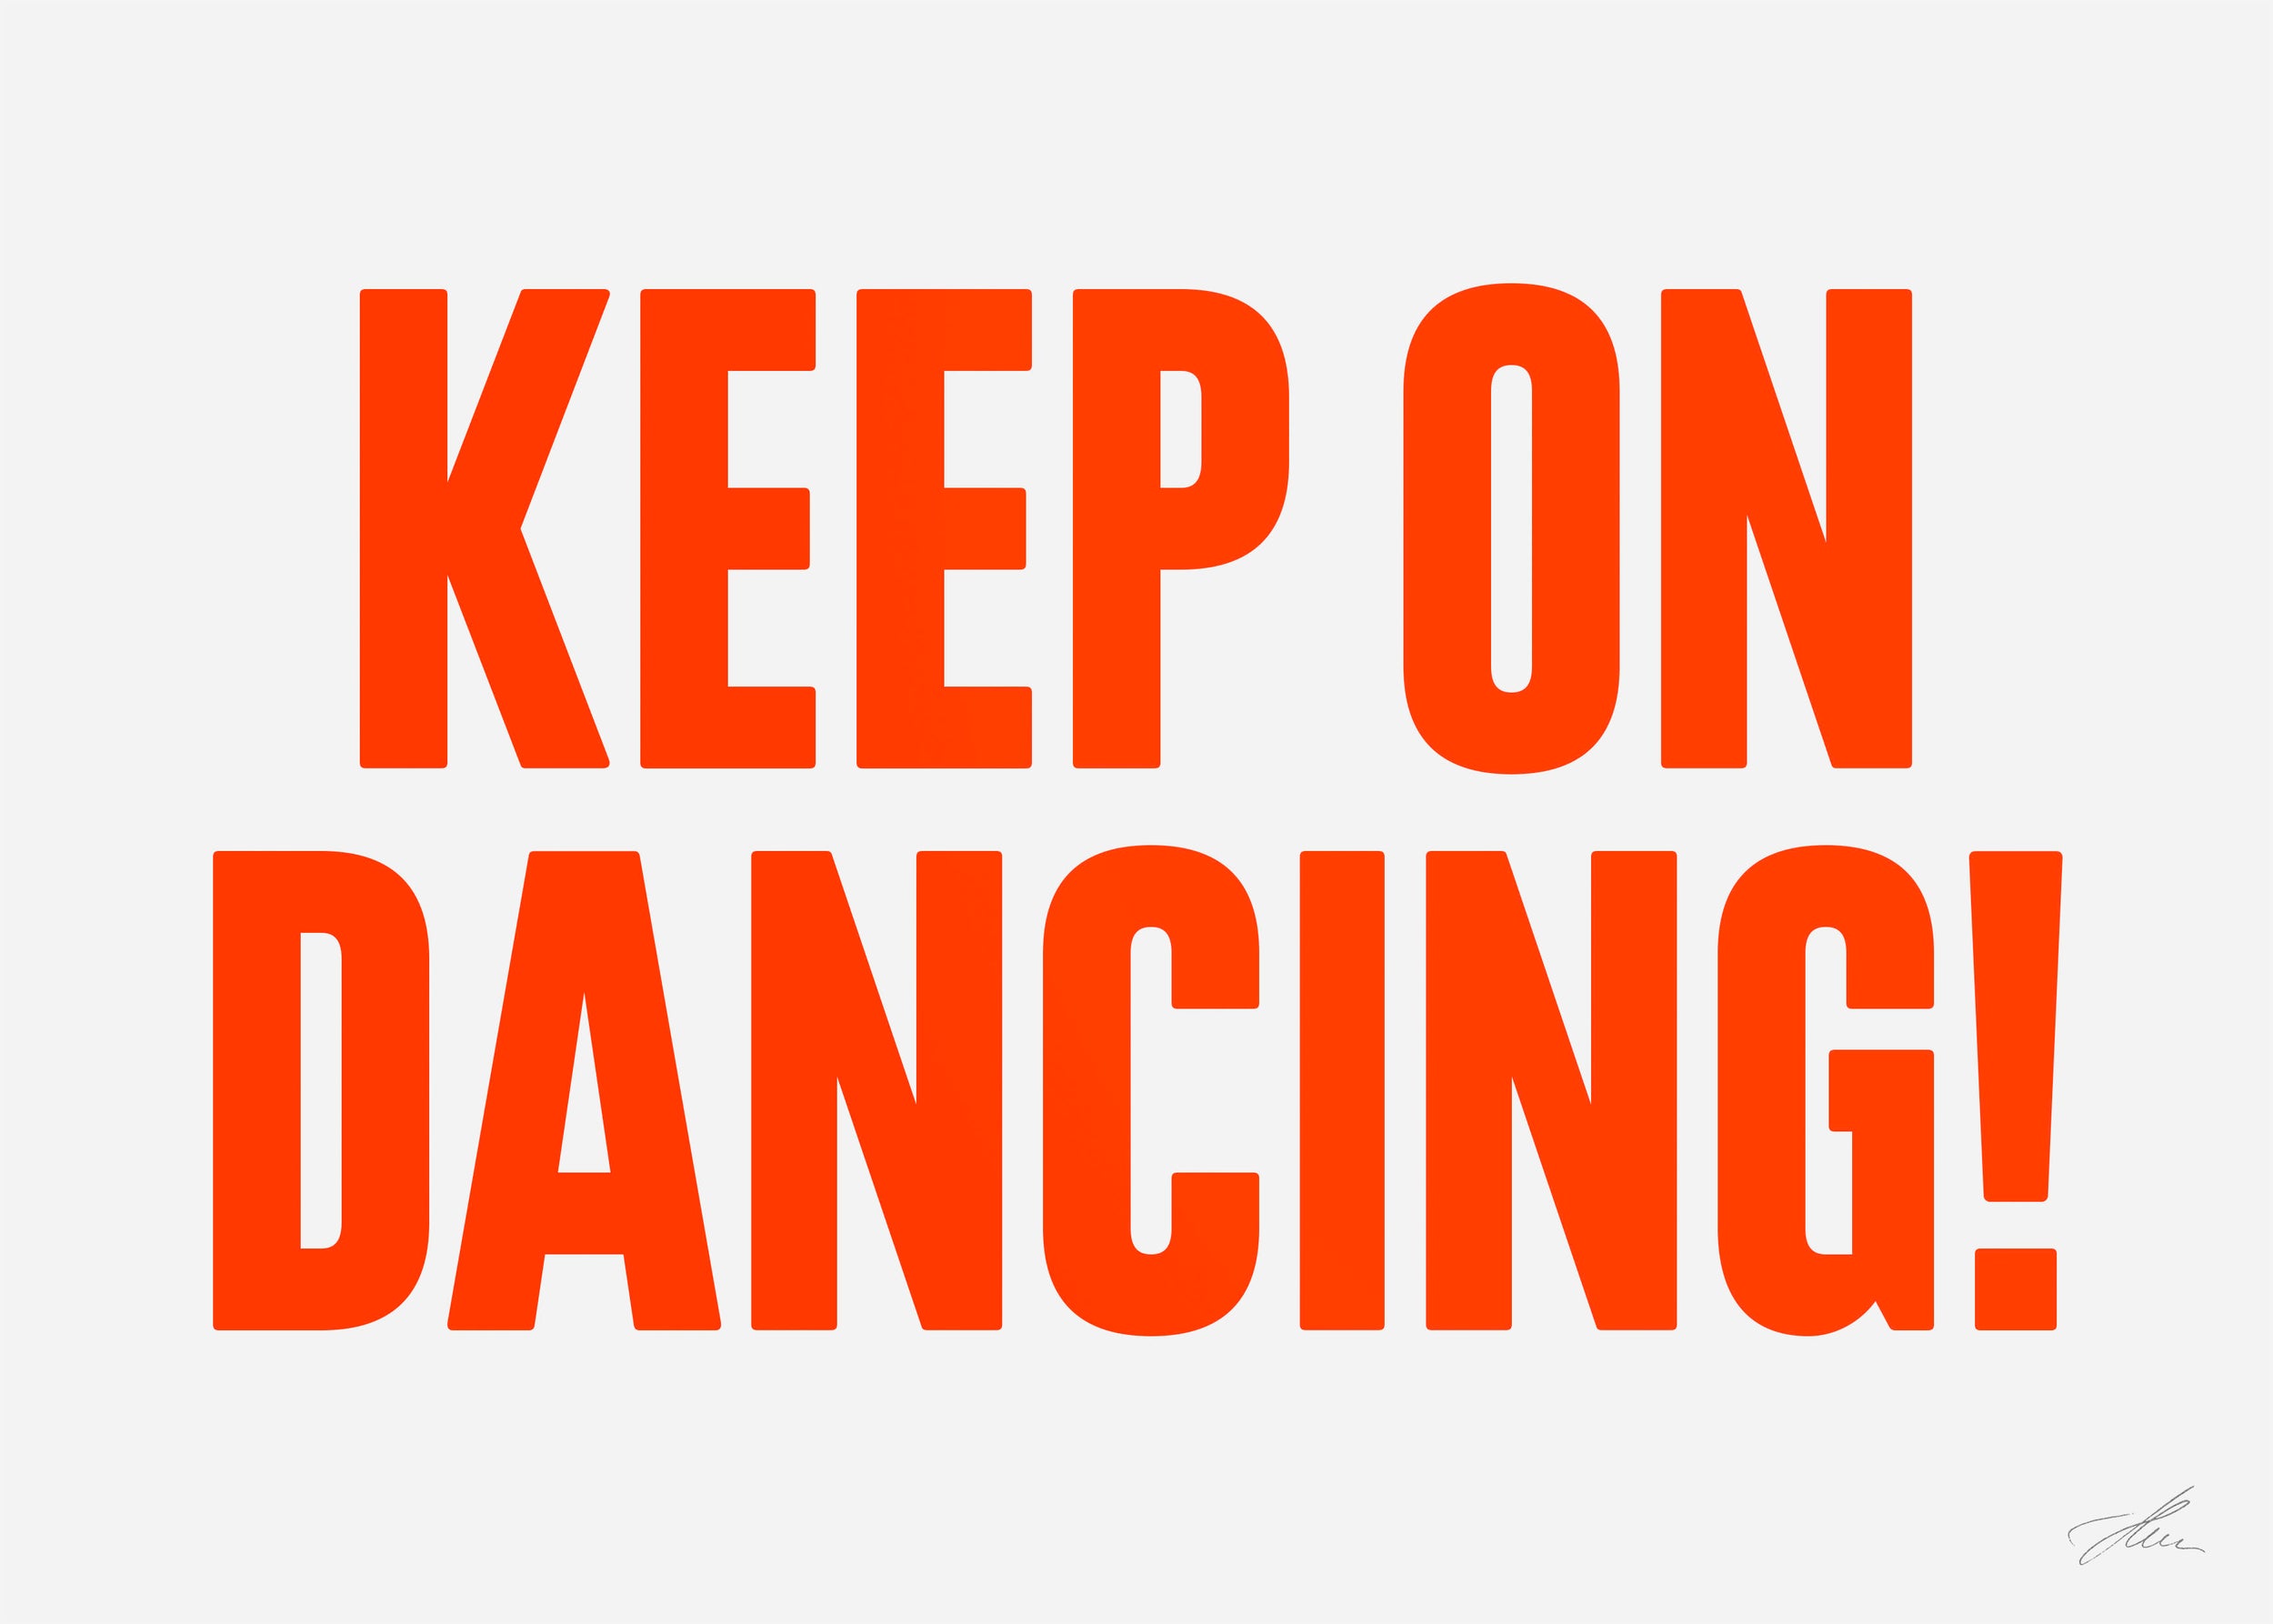 Keep on dancing!